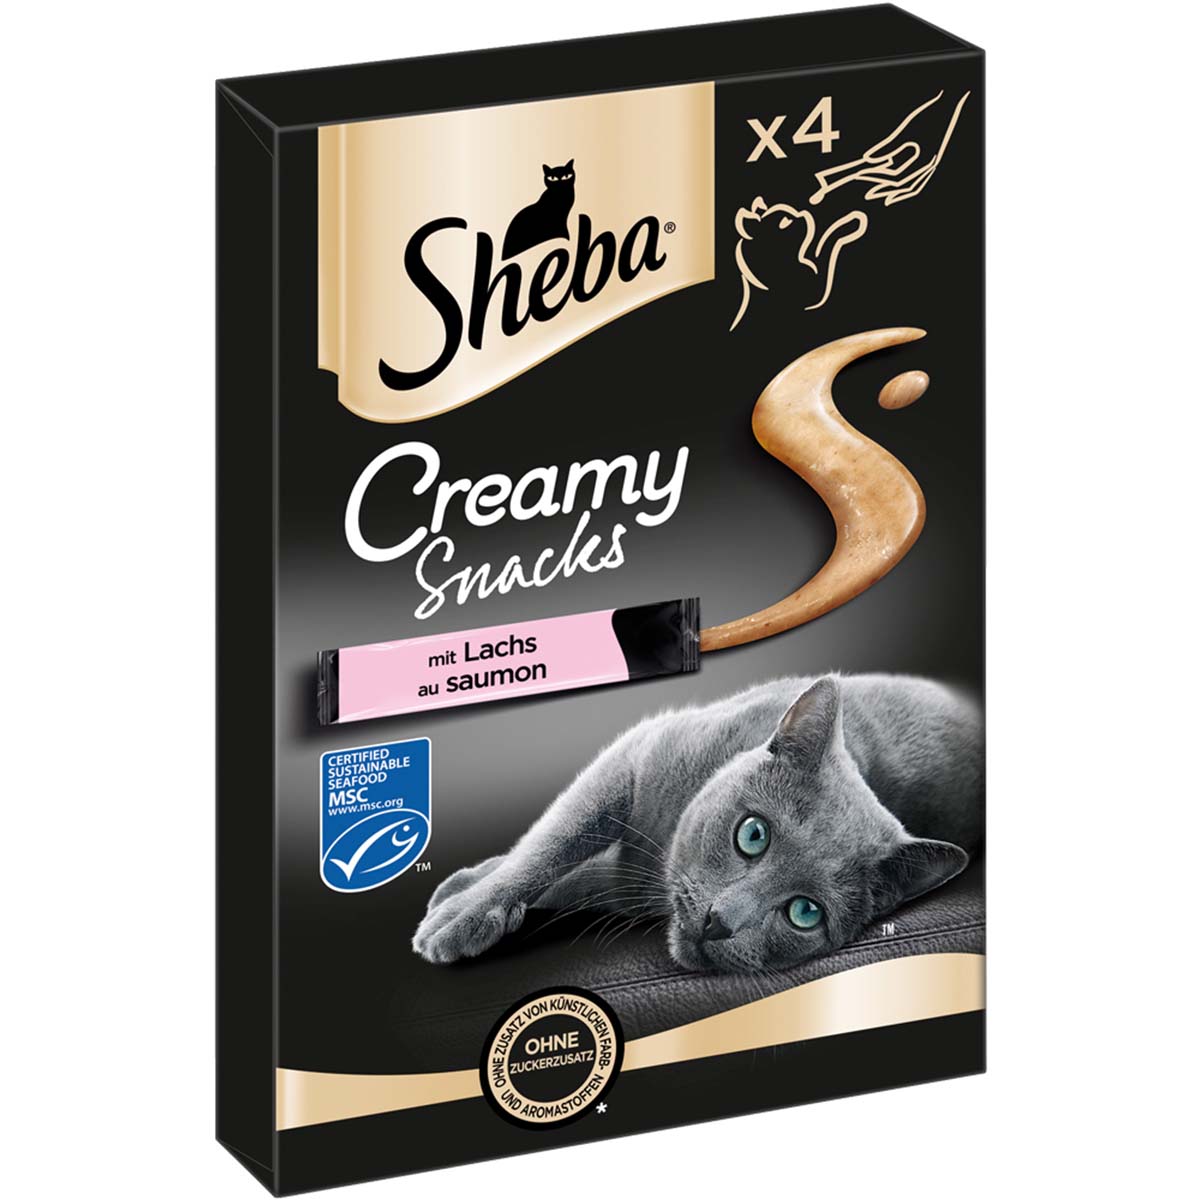 SHEBA® Creamy Snacks mit Lachs 8x12g von Sheba